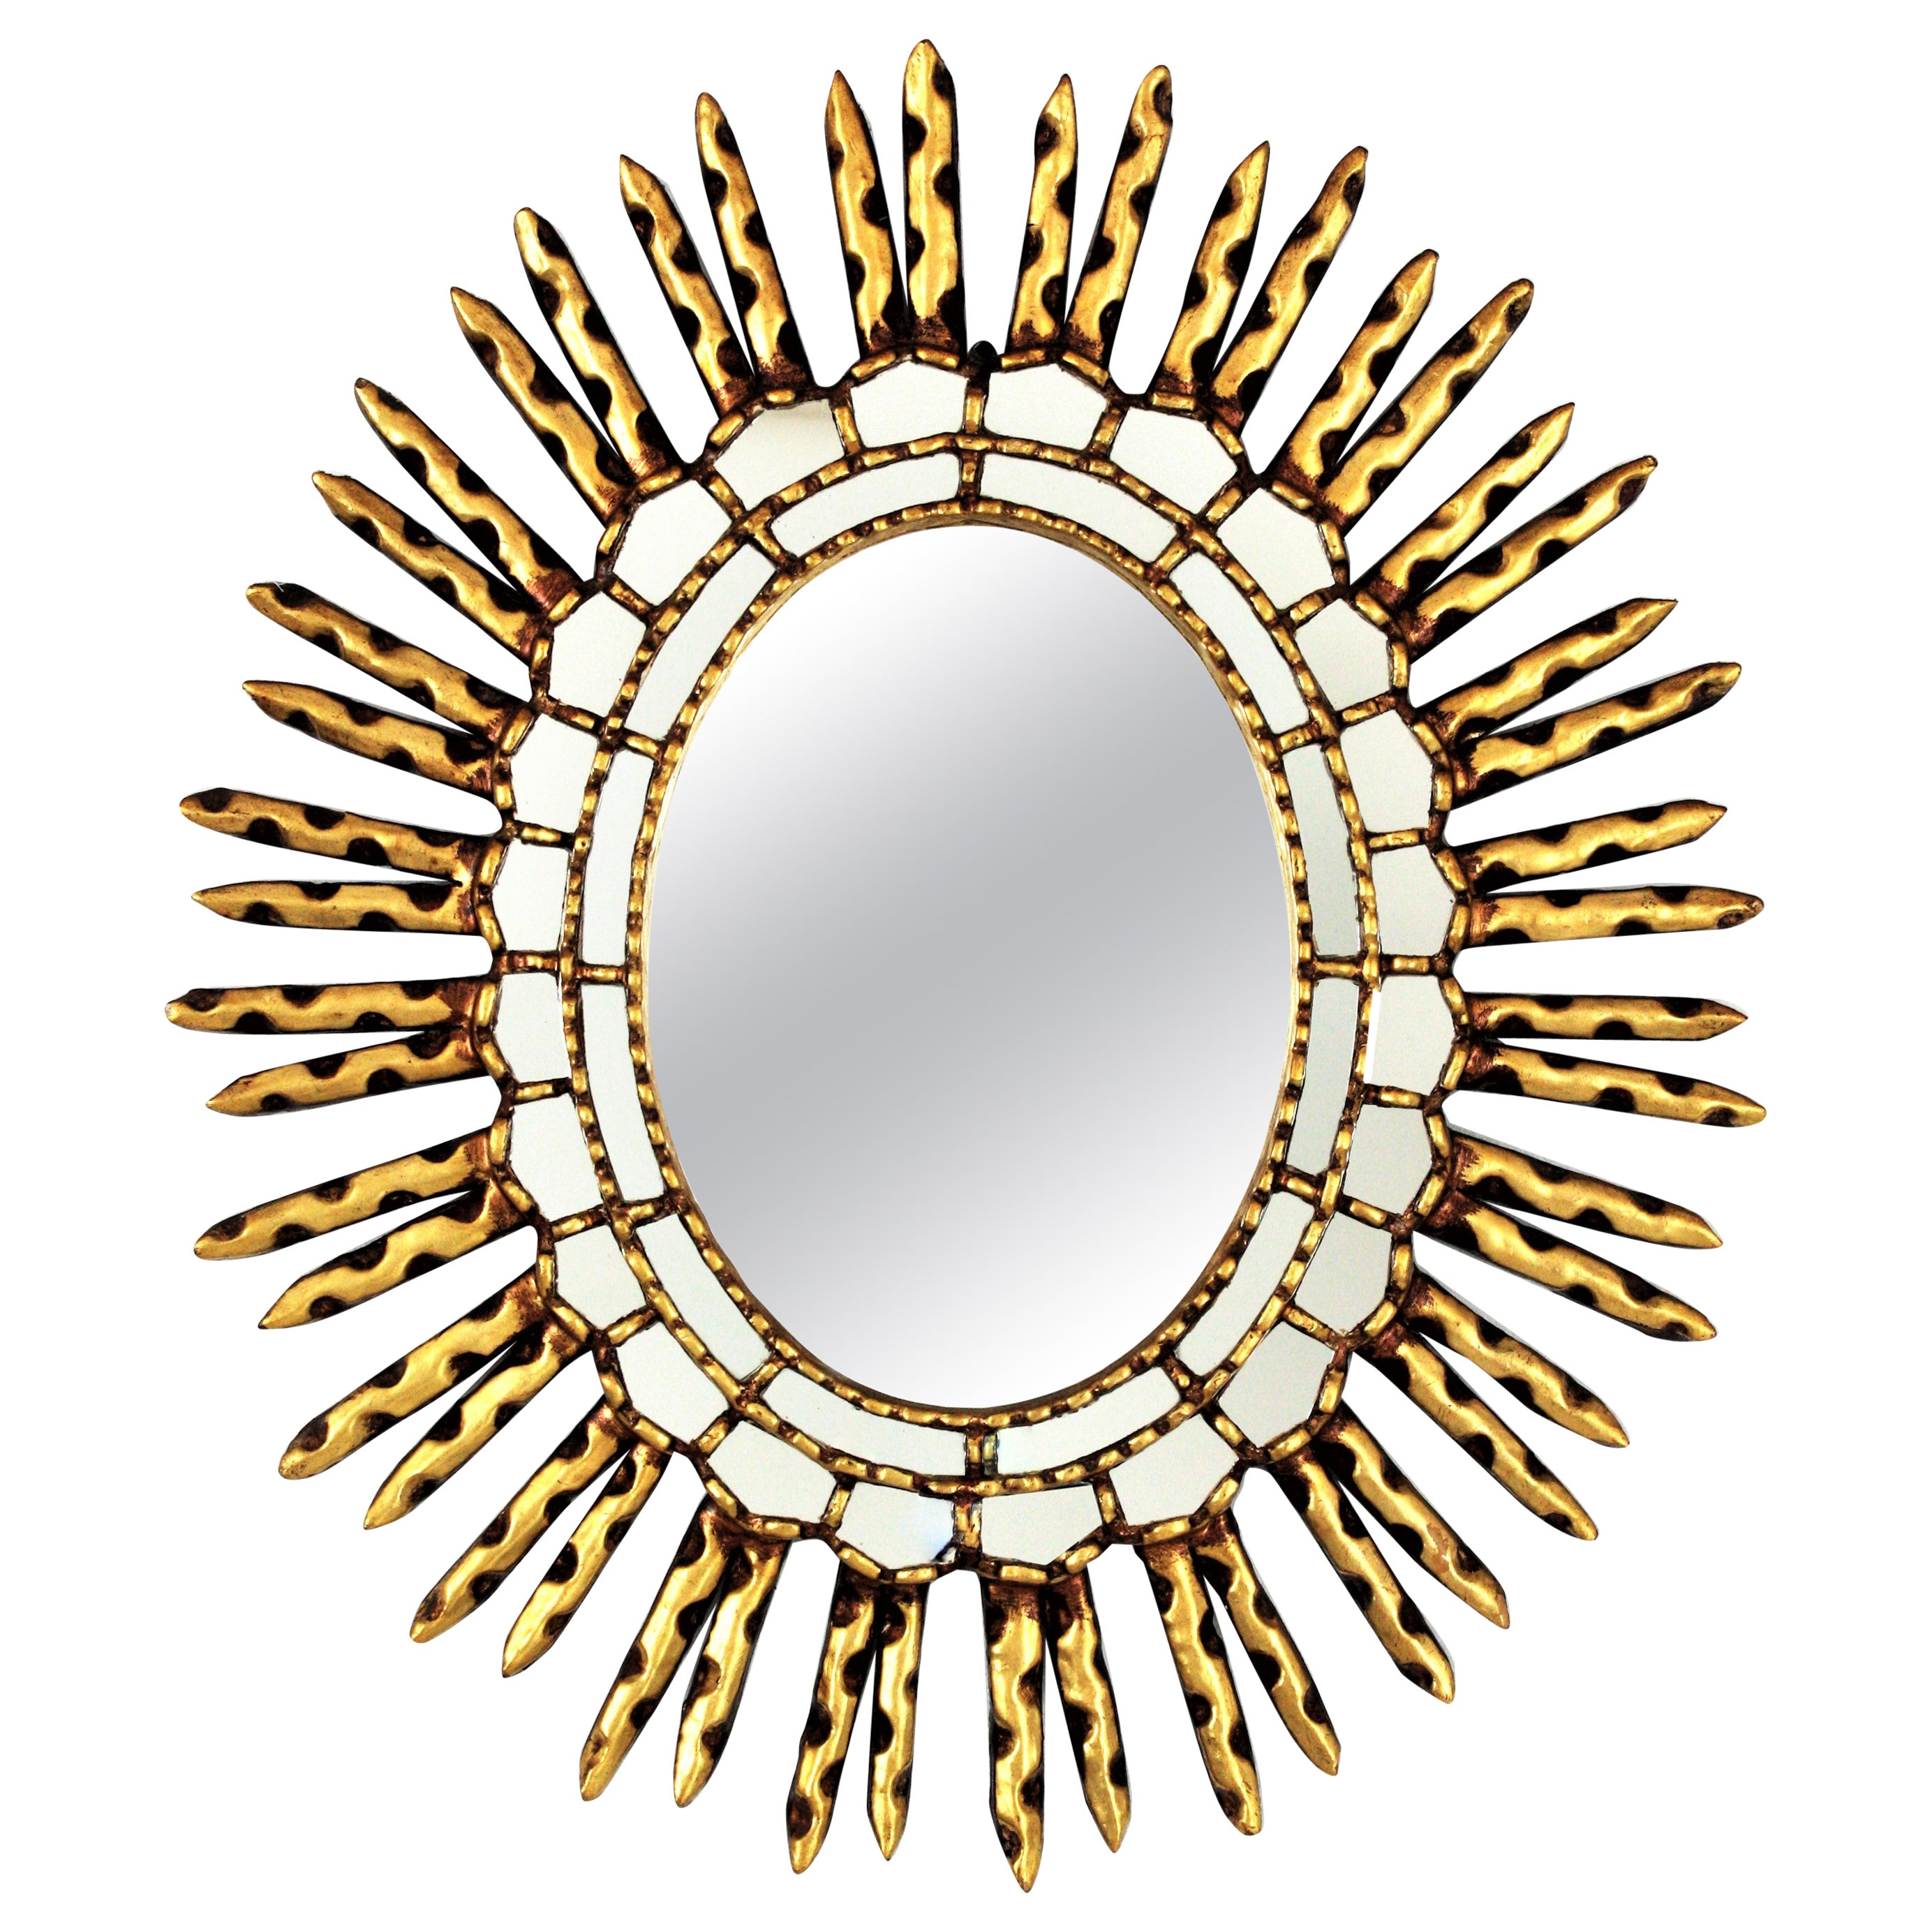 Spanish Colonial Sunburst Oval Mirror in Giltwood